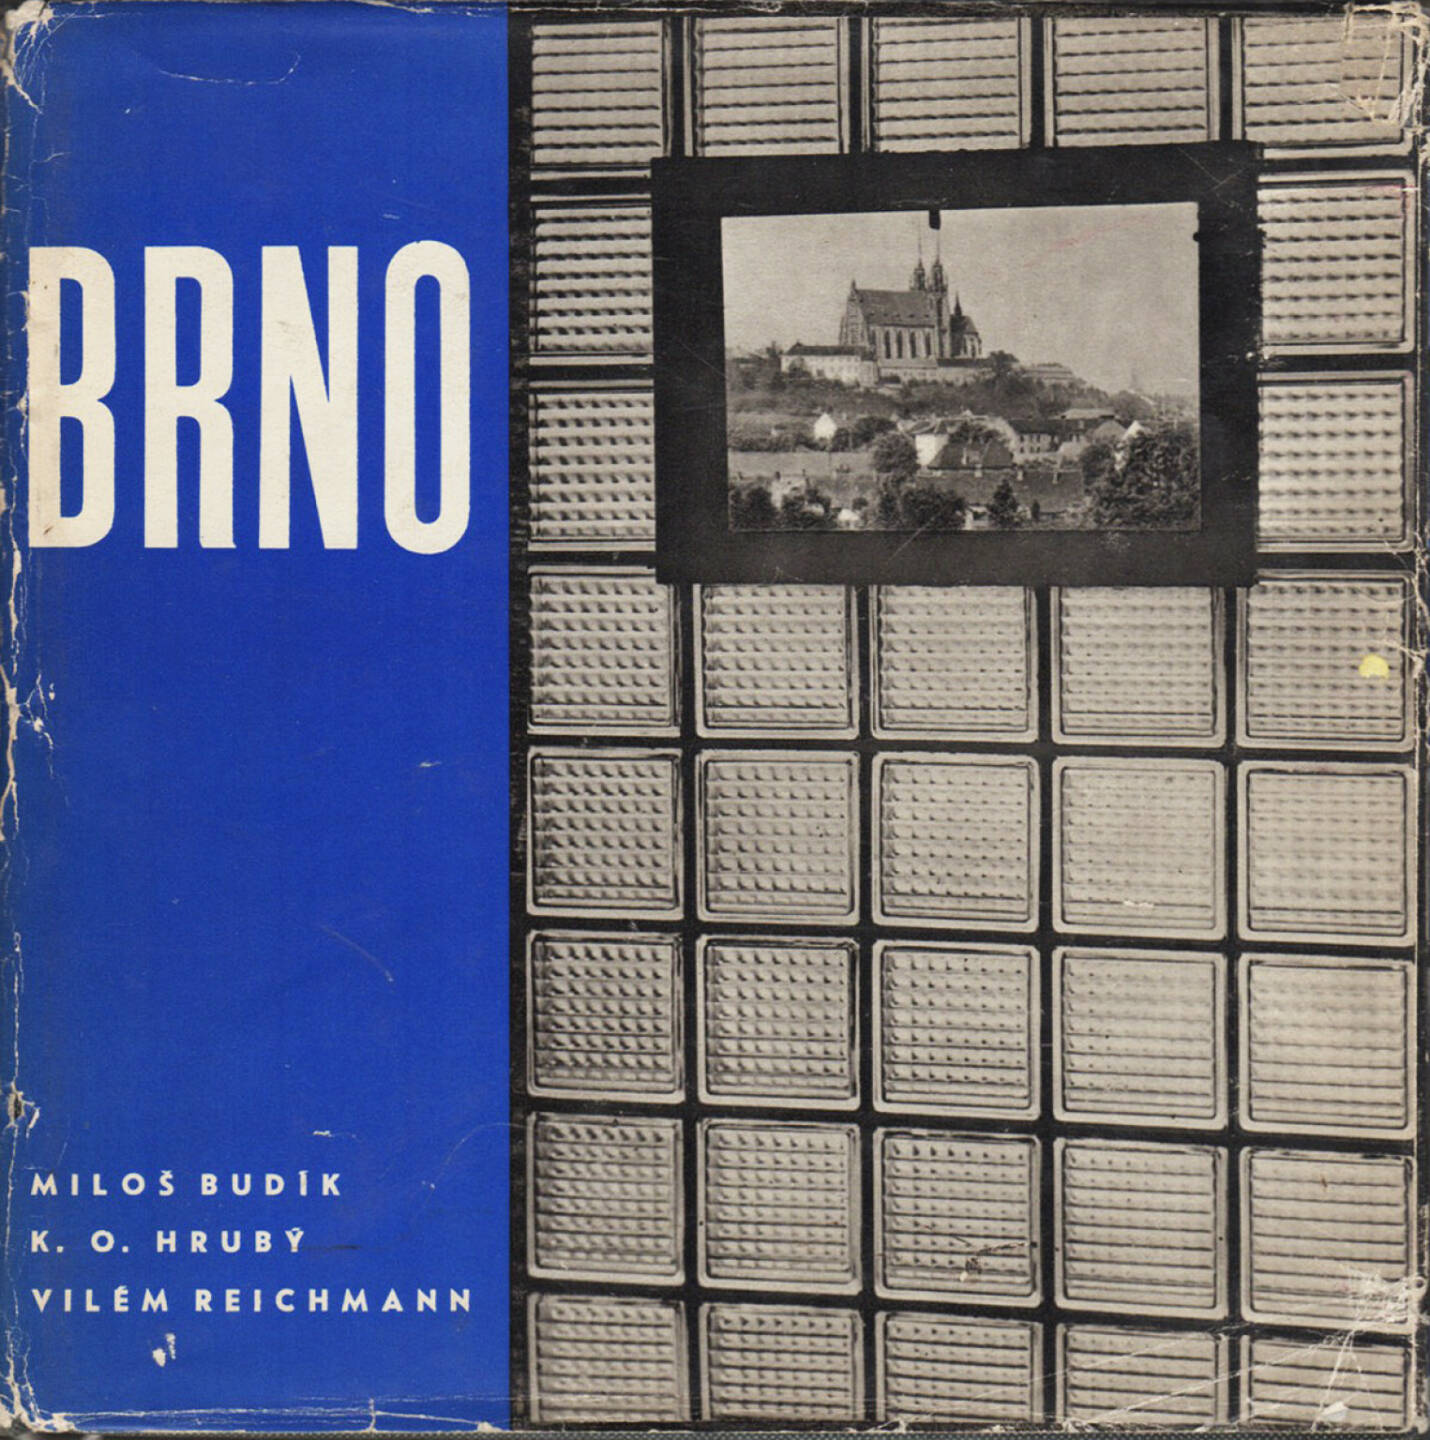 Vilém Reichmann / Miloš Budík / K.O. Hrubý - Brno, Krajské nakladatelství v Brně 1964, Cover - http://josefchladek.com/book/vilem_reichmann_miloš_budik_ko_hruby_-_brno